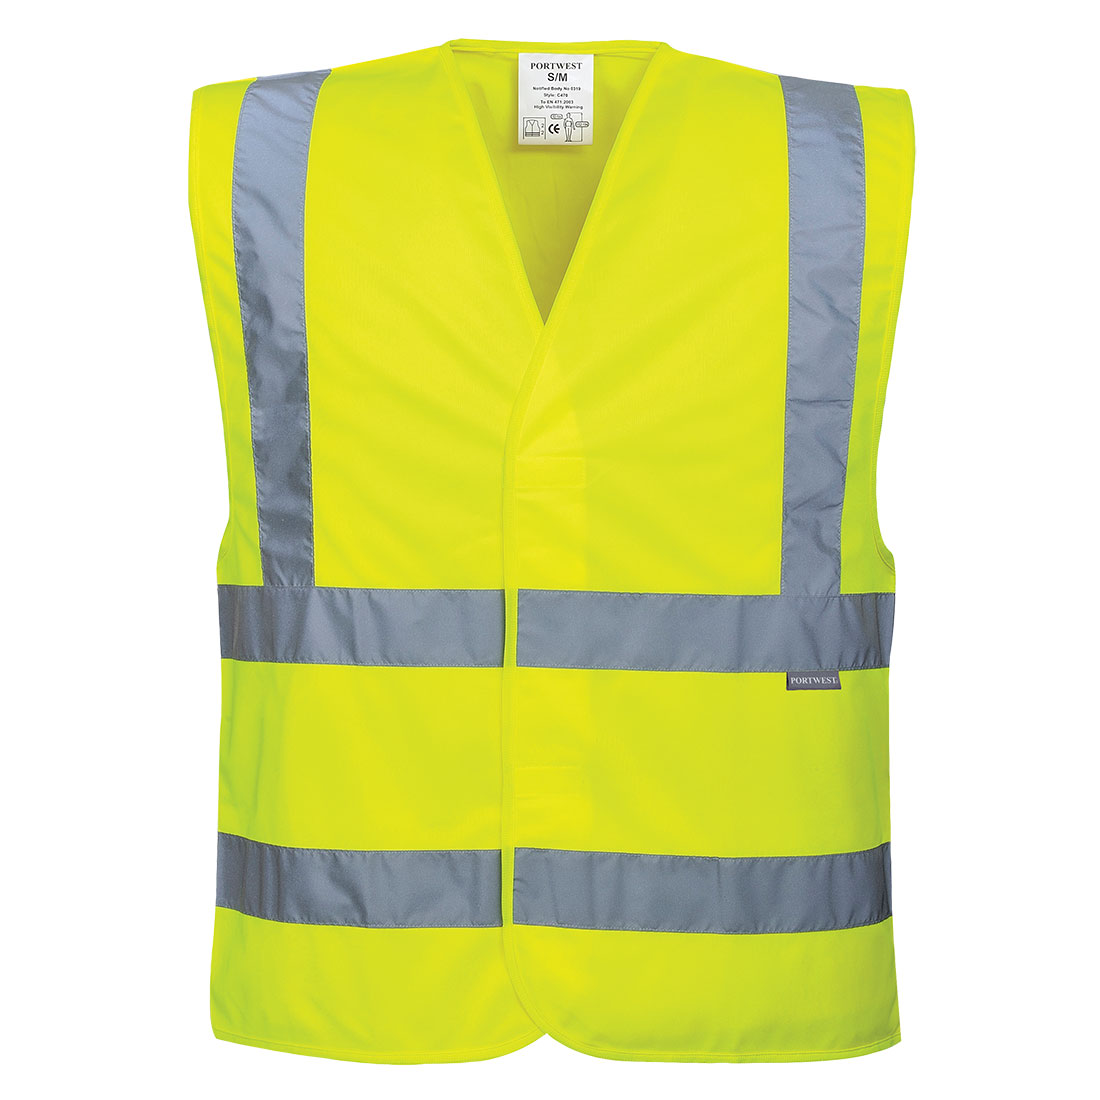 Hi-Vis Band and Brace Vest, Yellow     Size SM R/Fit